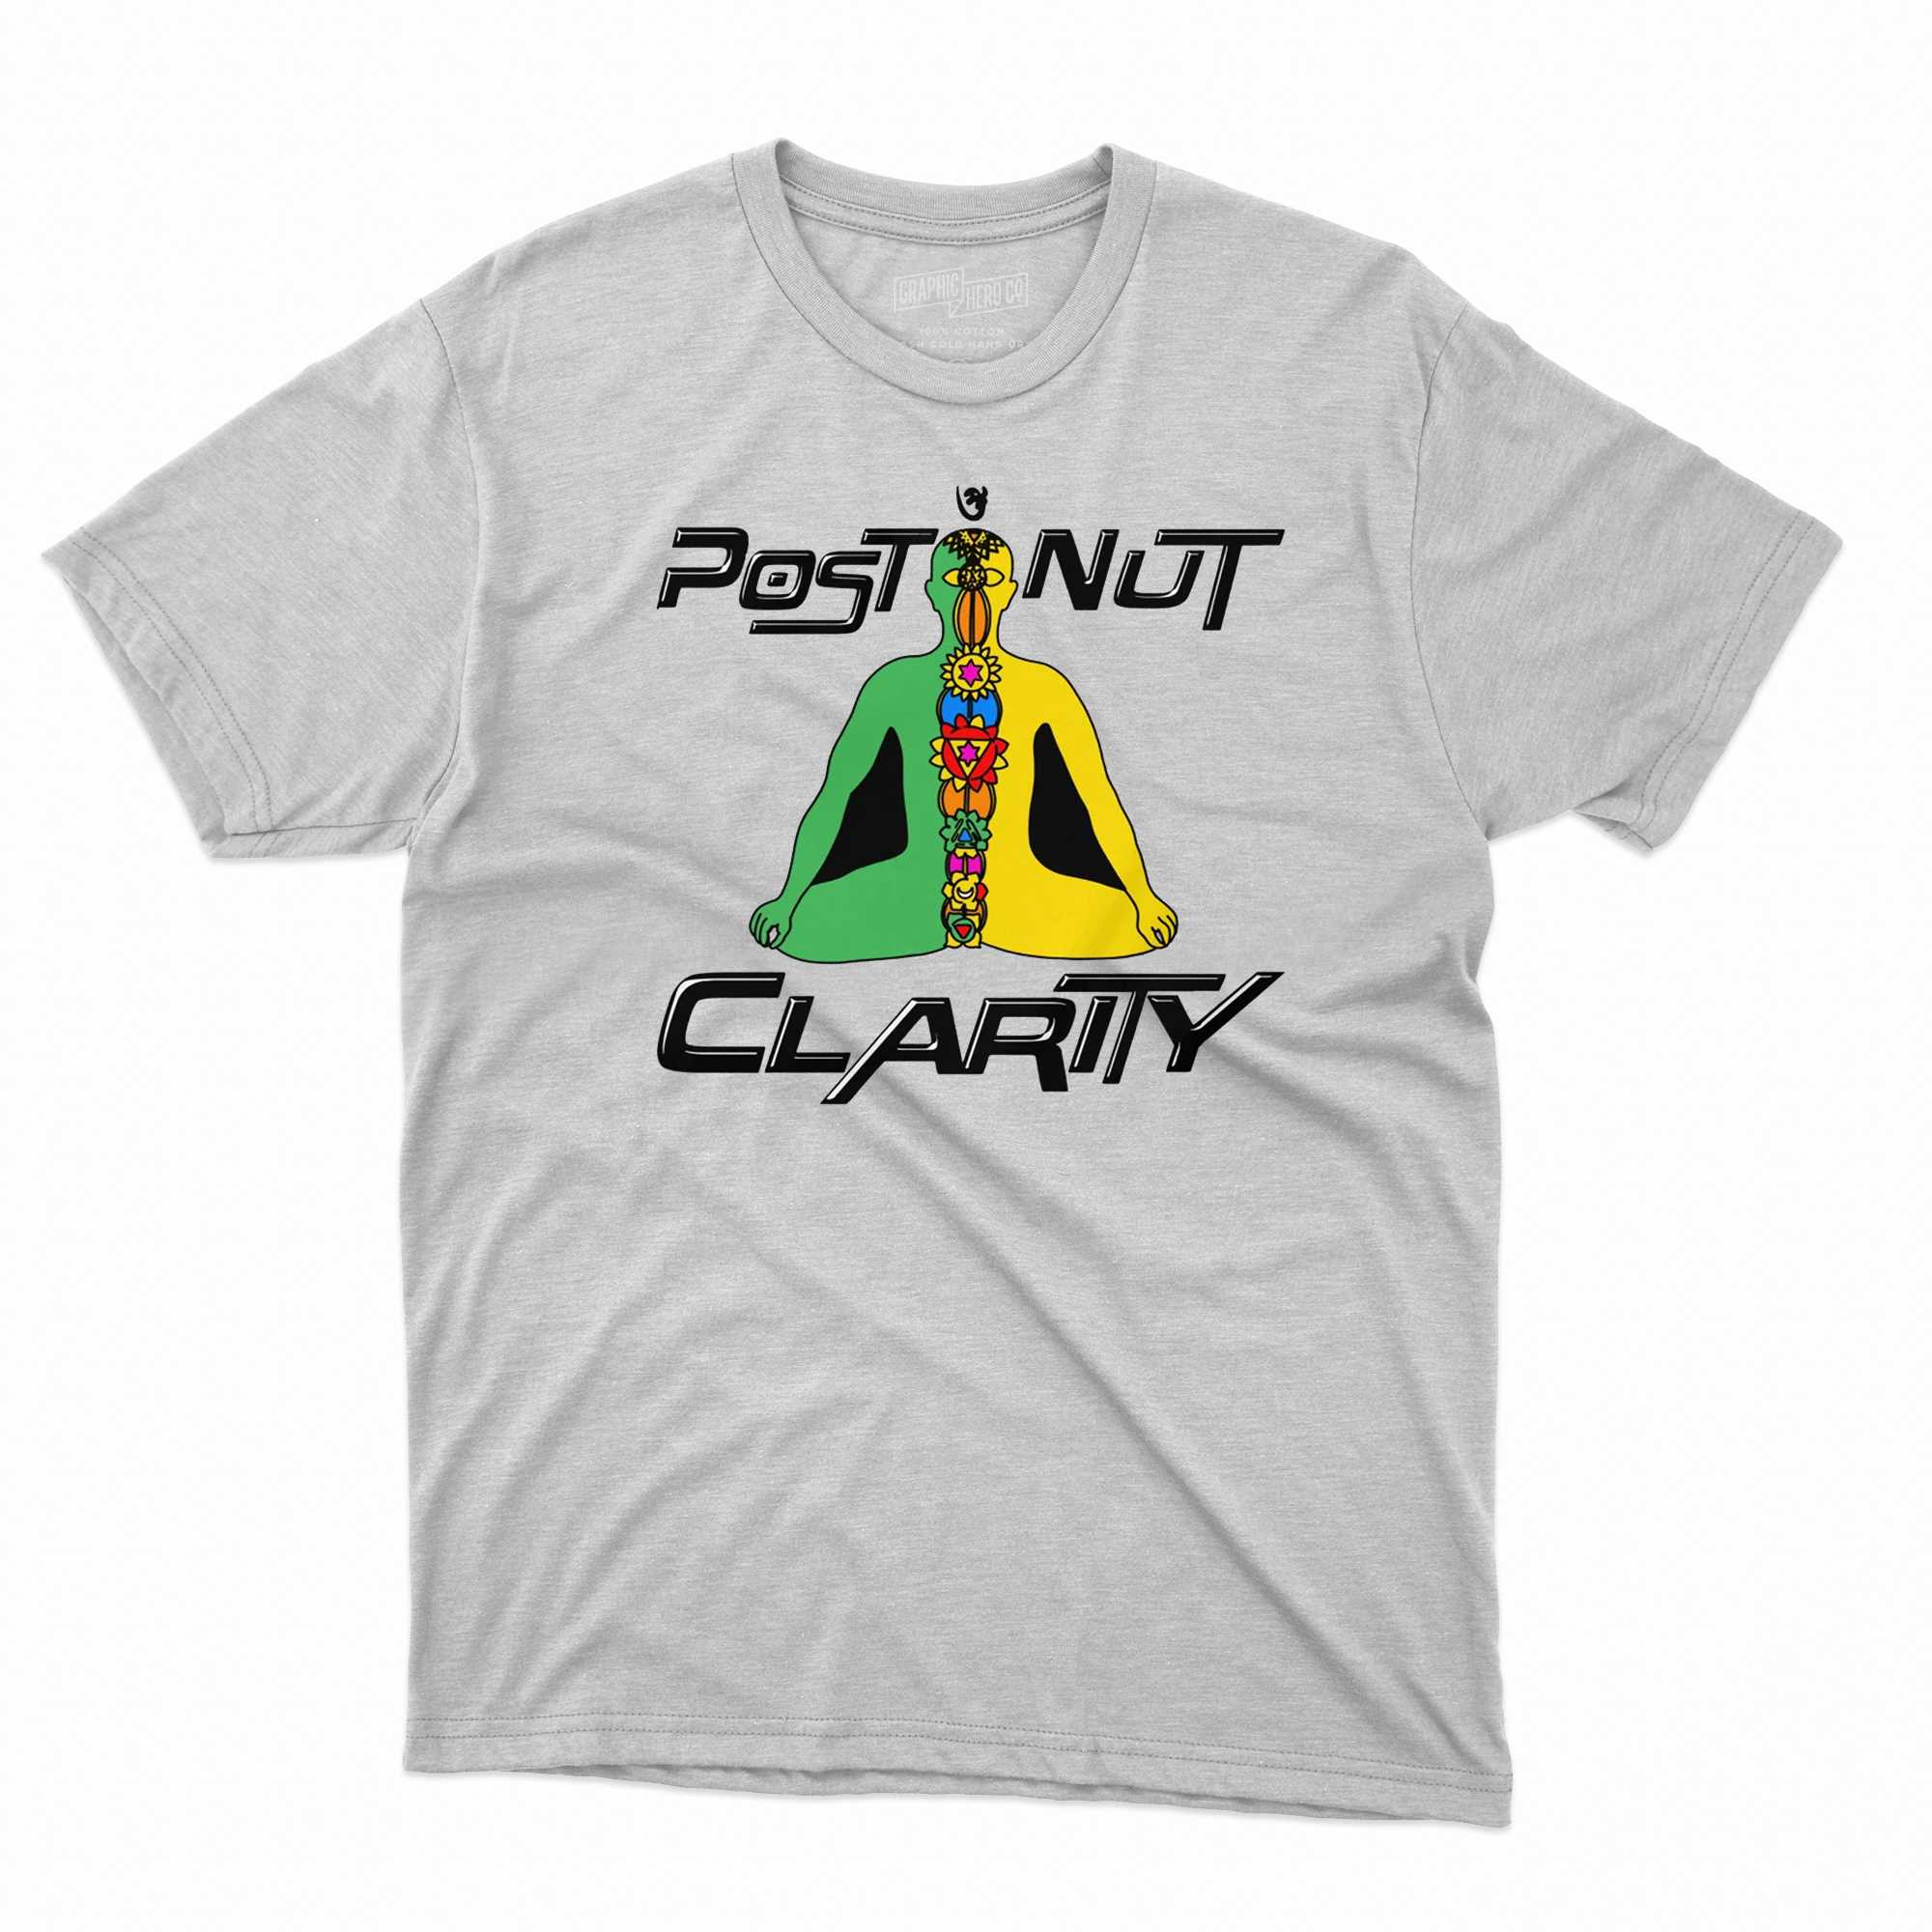 post nut clarity shirt sweatshirt 1 1